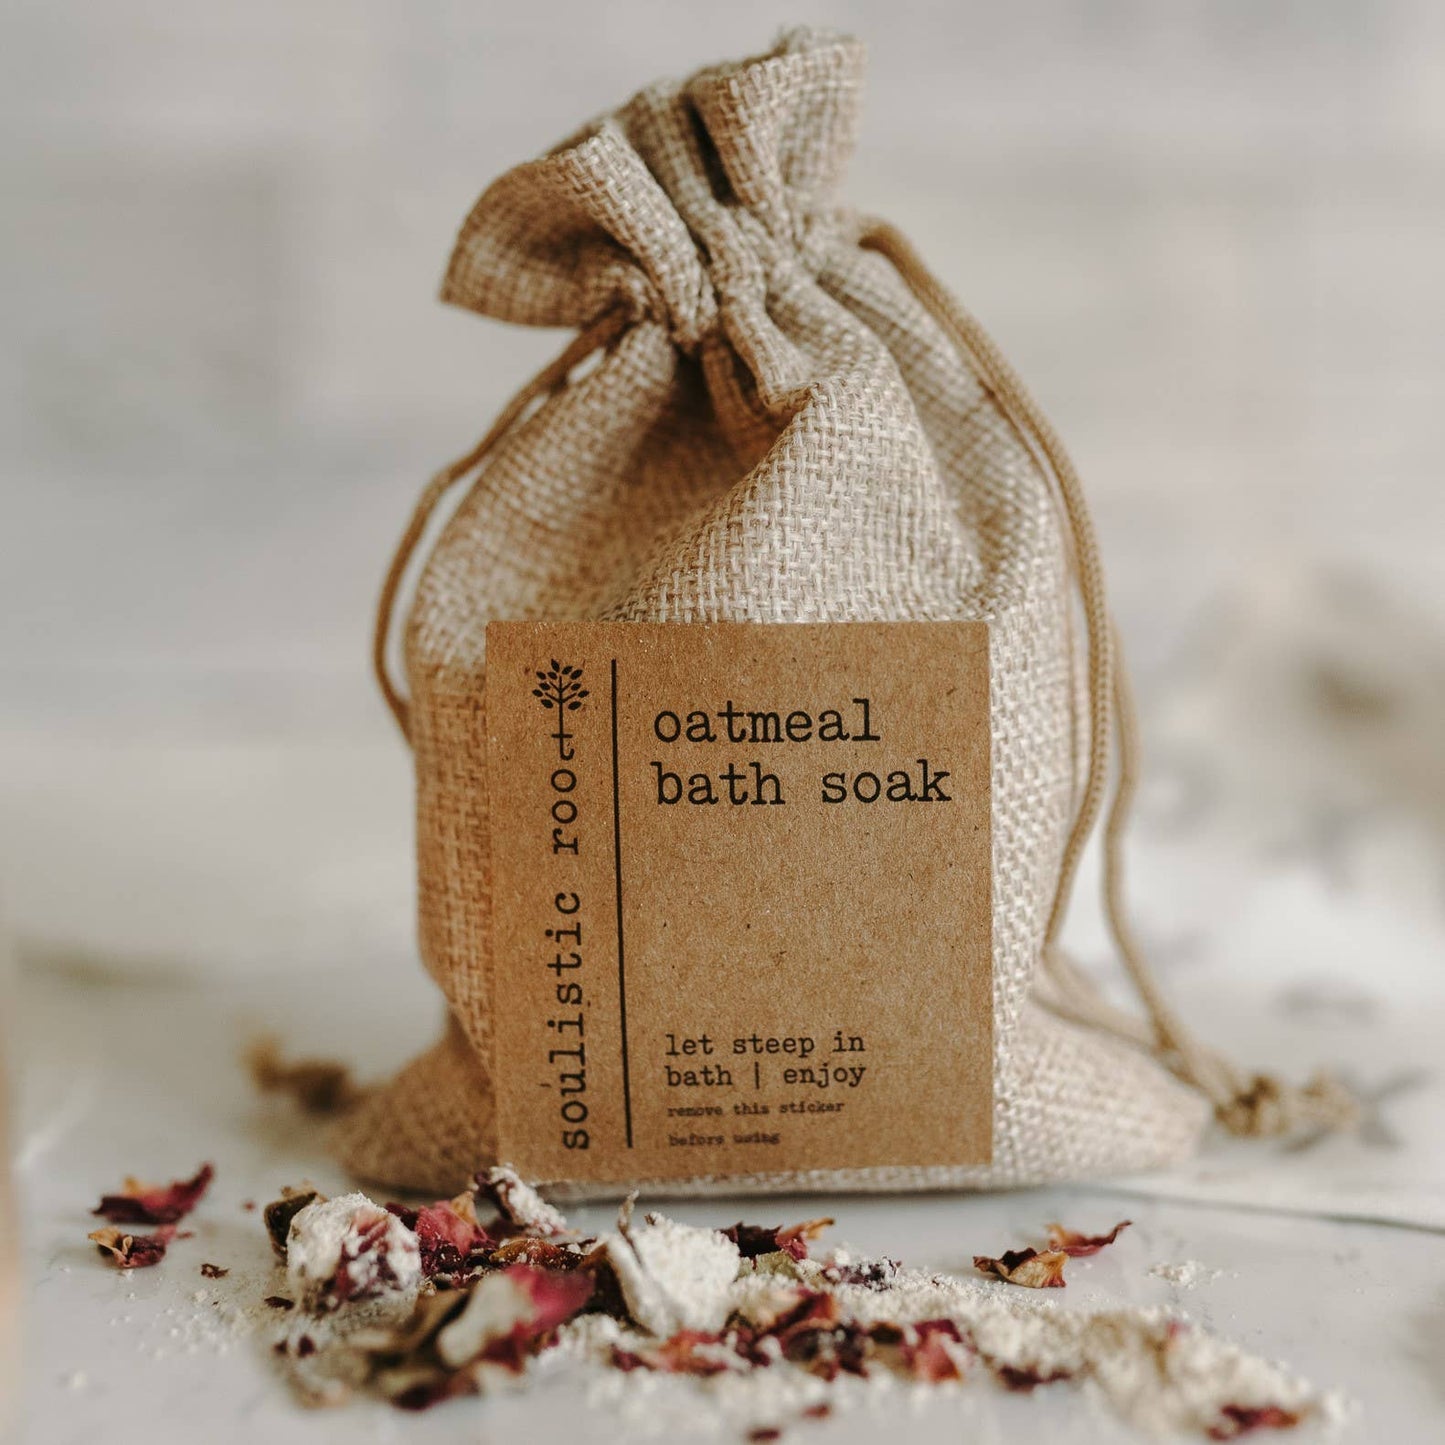 Essential Oils & Self Care Gifts - Rose Petal Herbal Oatmeal Bath Soak | Bath Tea: Chamomile